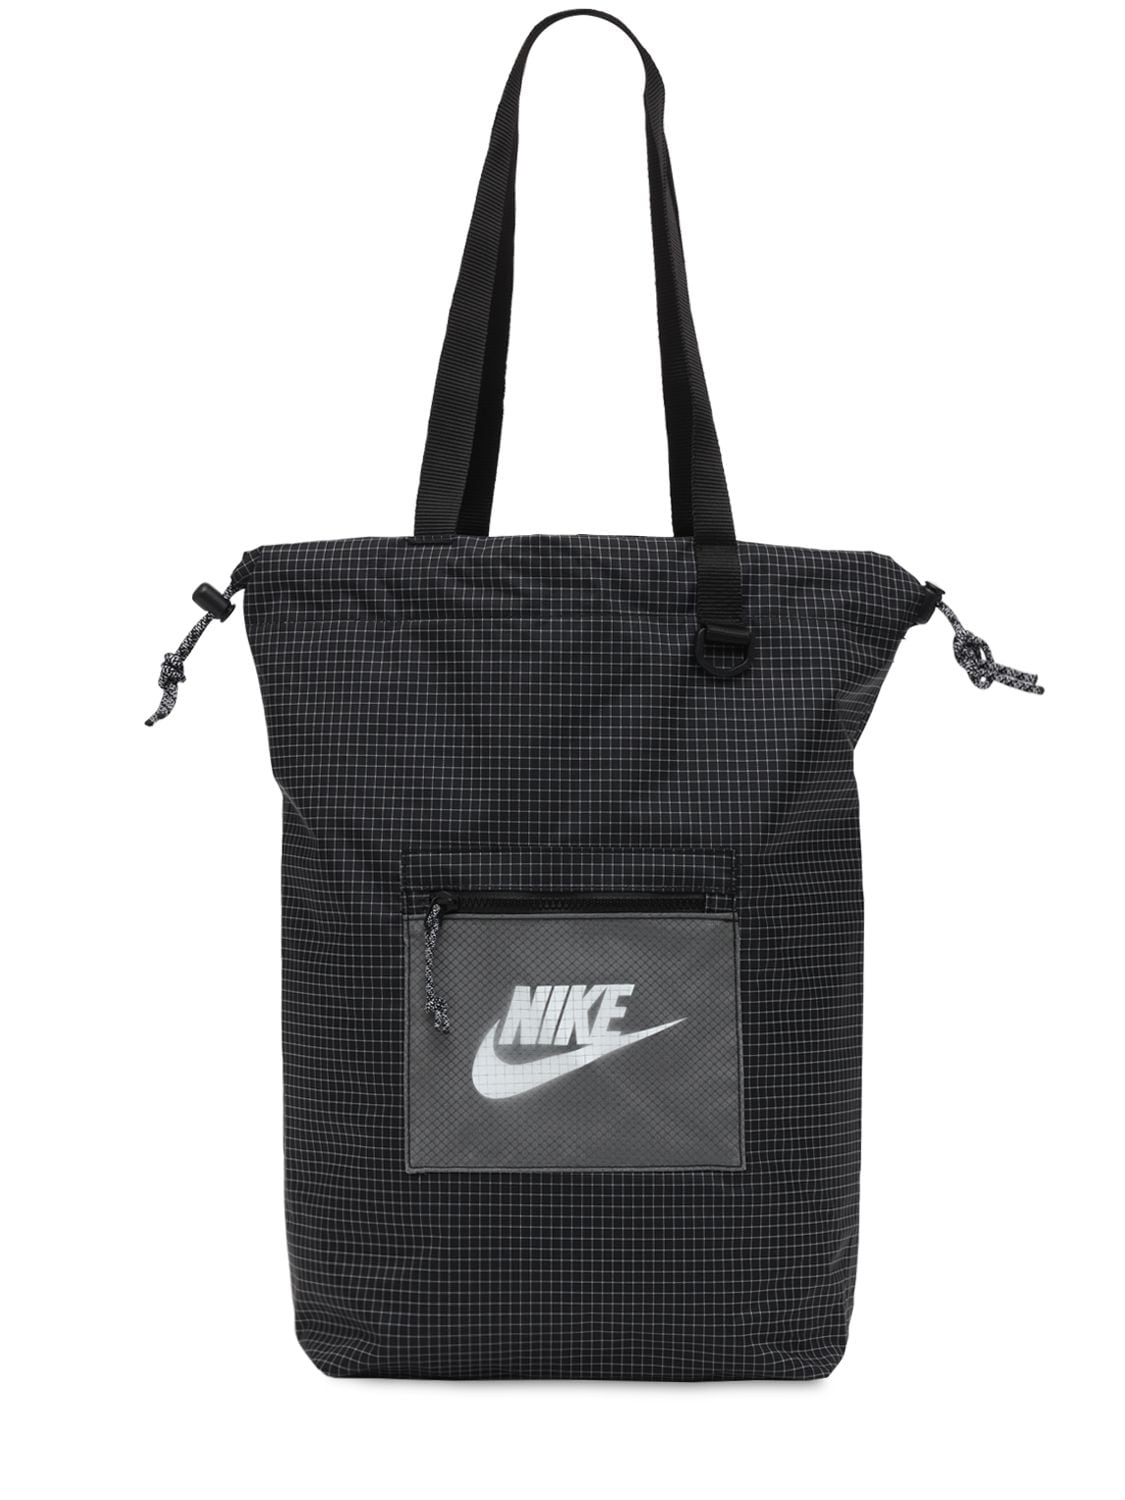 Nike Heritage Tote Bag In Black | ModeSens